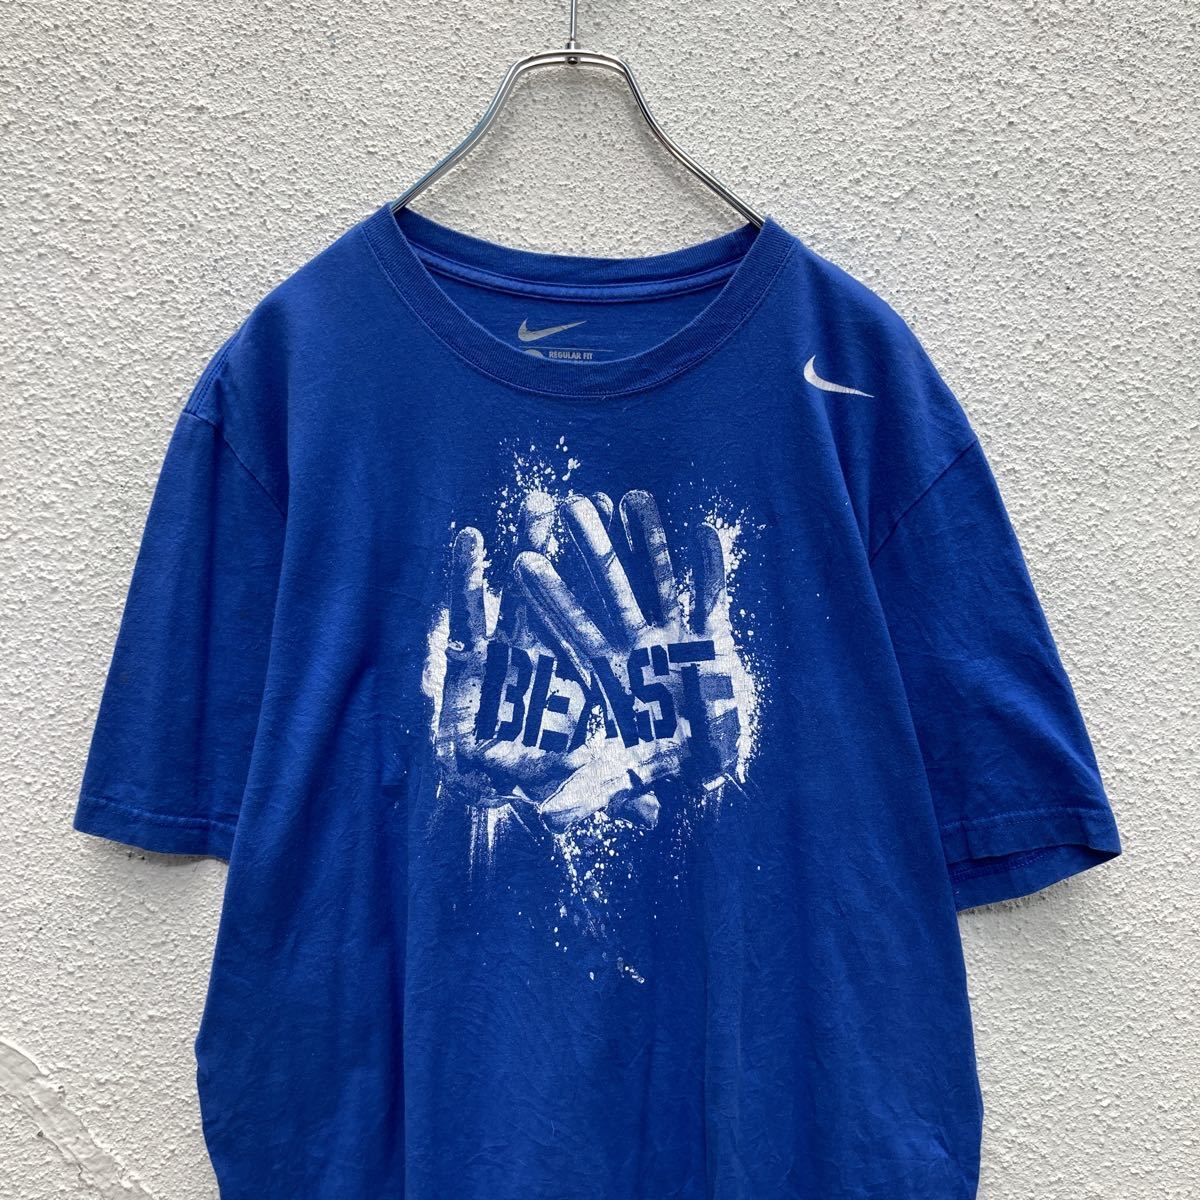 NIKE  короткие рукава   принт   футболка  L  голубой  белый   Nike  BEAST  рука   лого    спорт   улица   бу одежда ...  Америка ... a504-6076